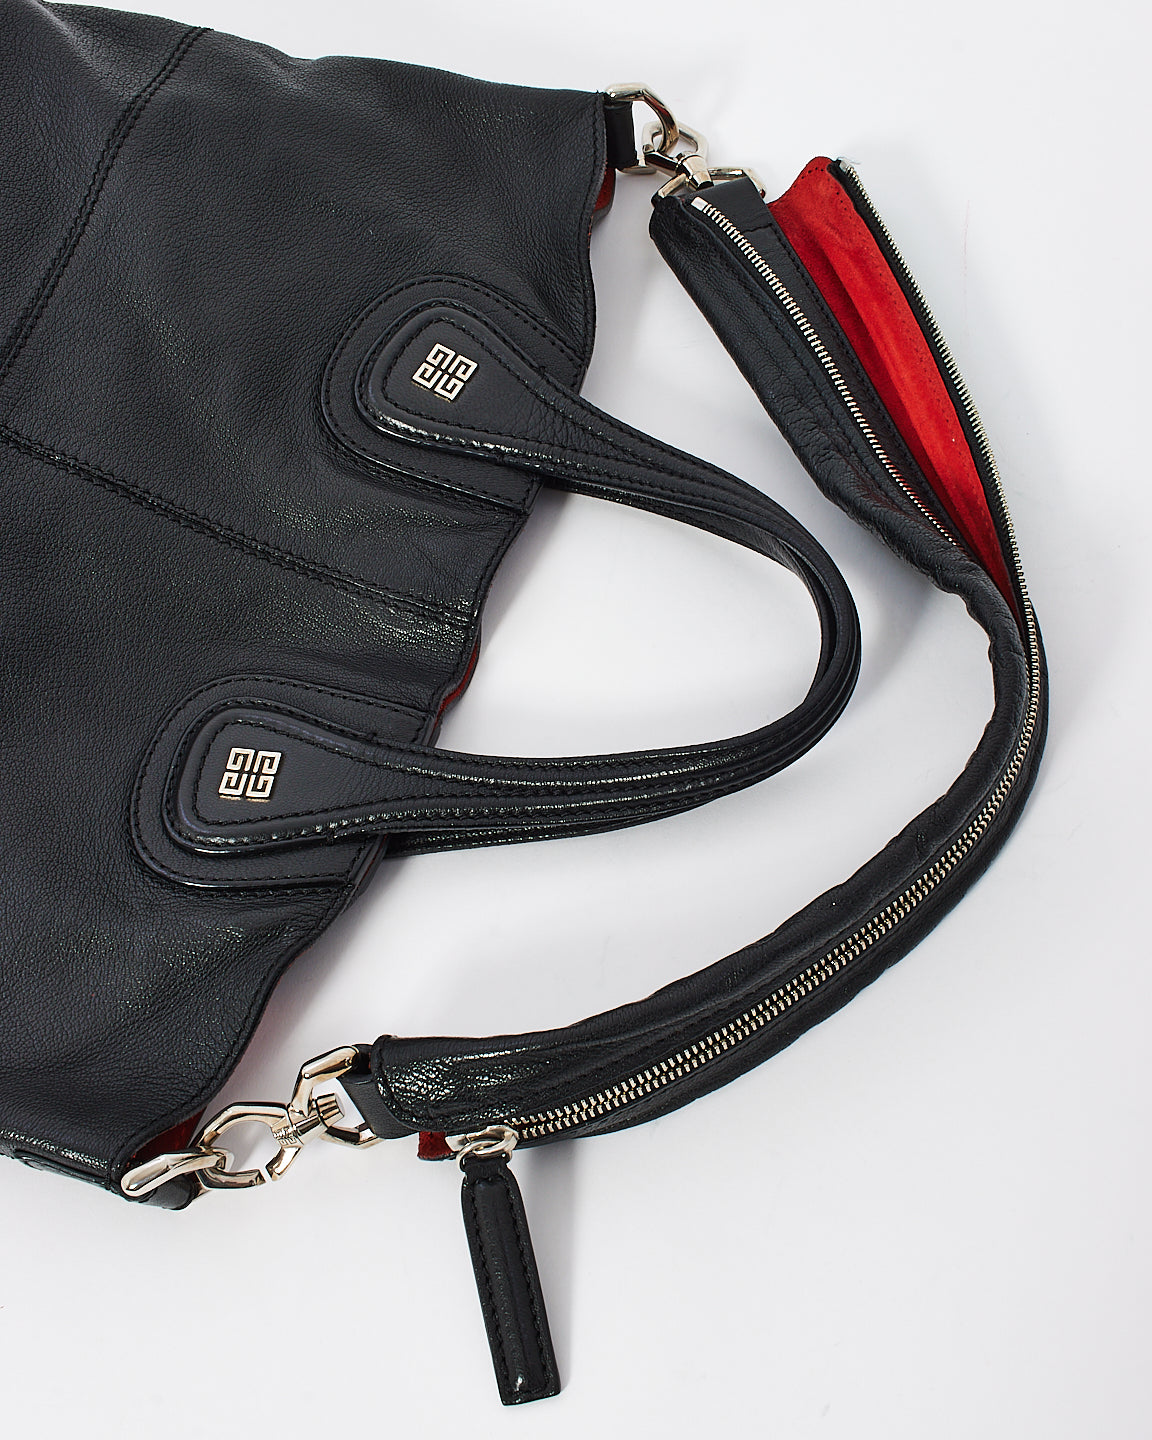 Givenchy Black Leather Nightingale North South Large Shoulder Bag